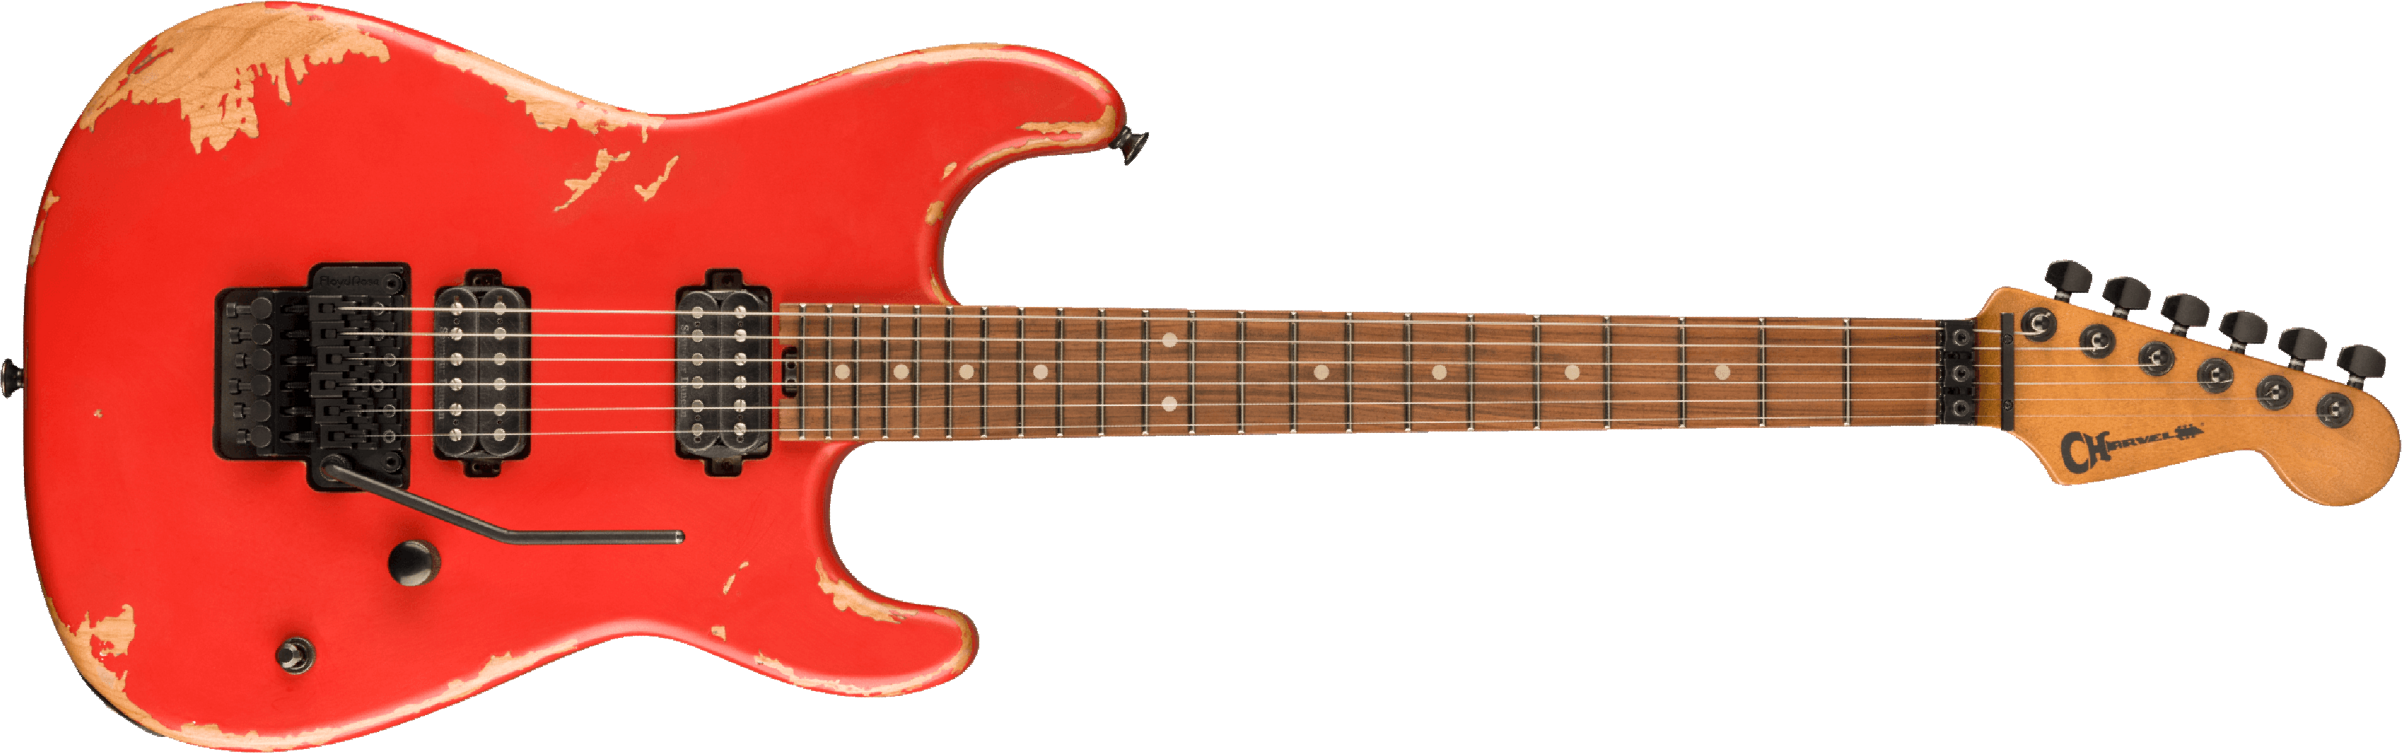 Charvel San Dimas Pro-mod Relic Style 1 Hh Fr E Pf - Weathered Orange - Str shape electric guitar - Main picture